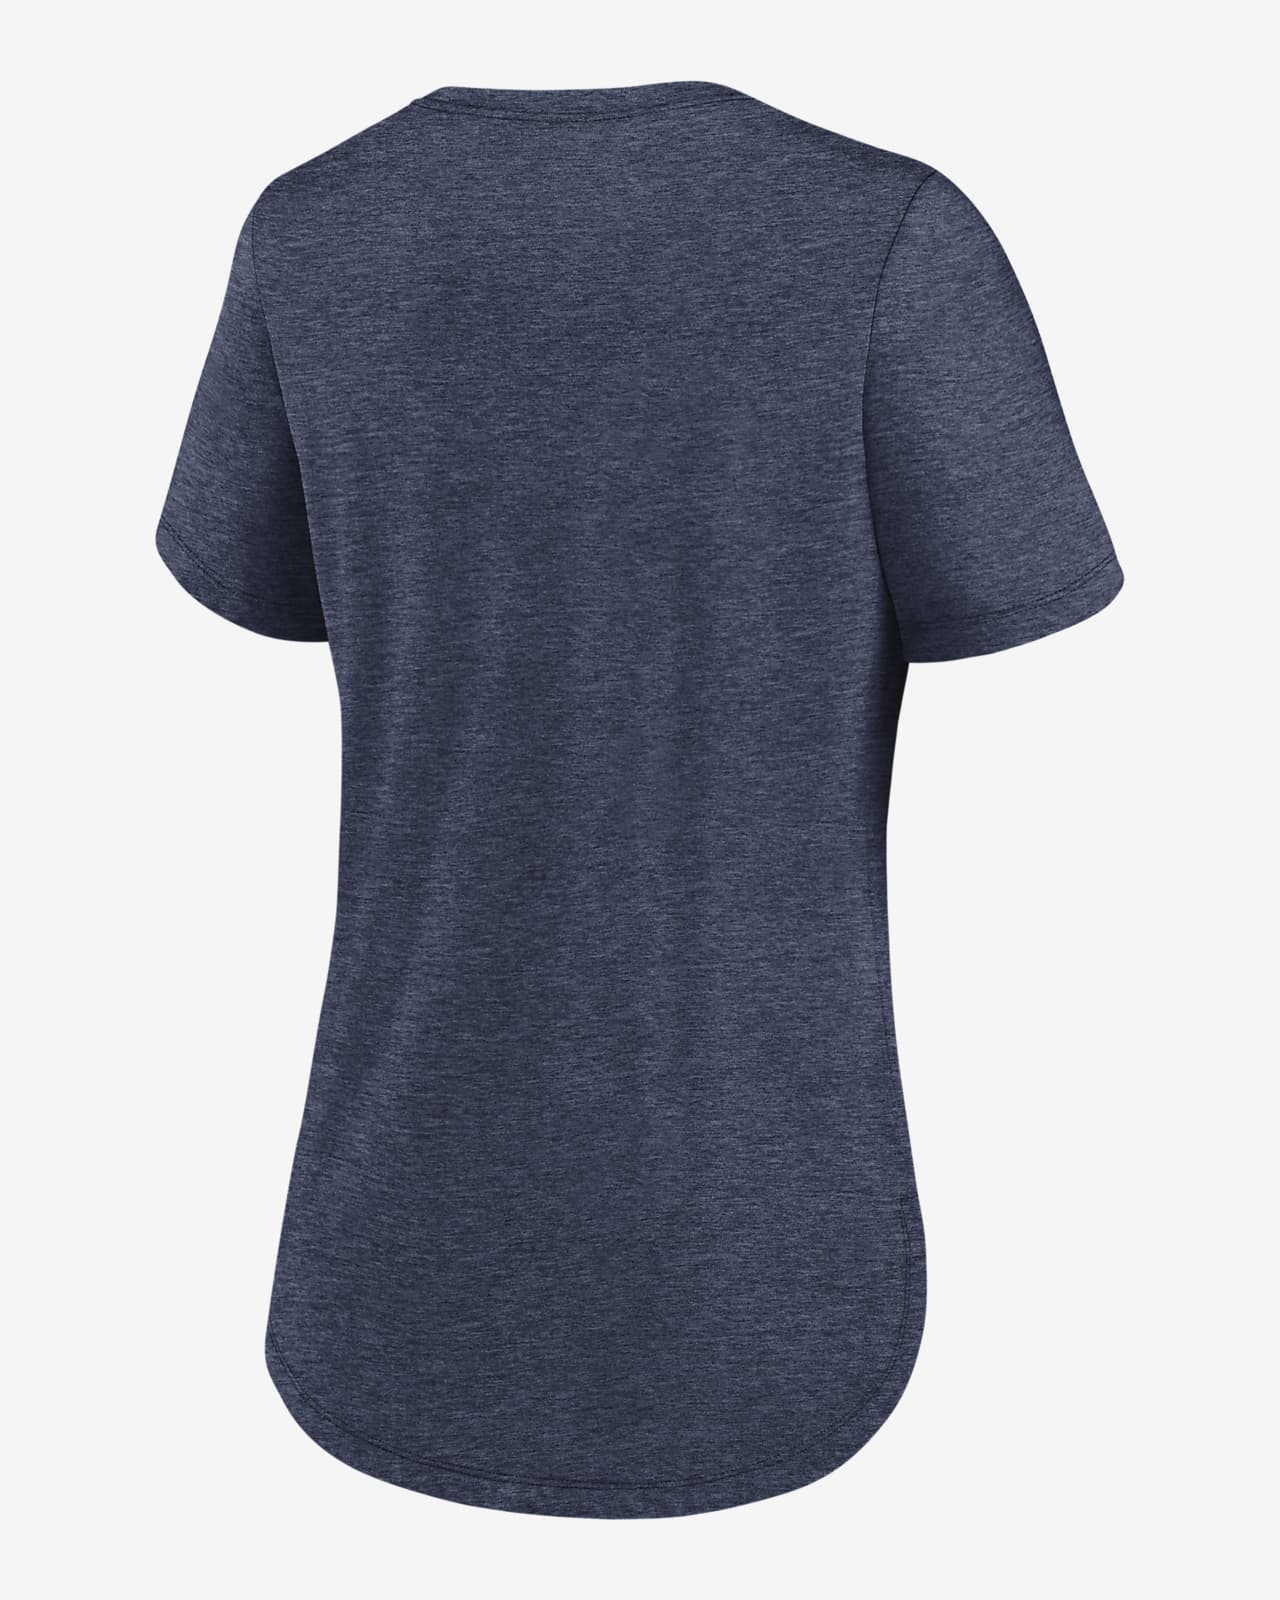 Nike City Connect (MLB Houston Astros) Women's T-Shirt.